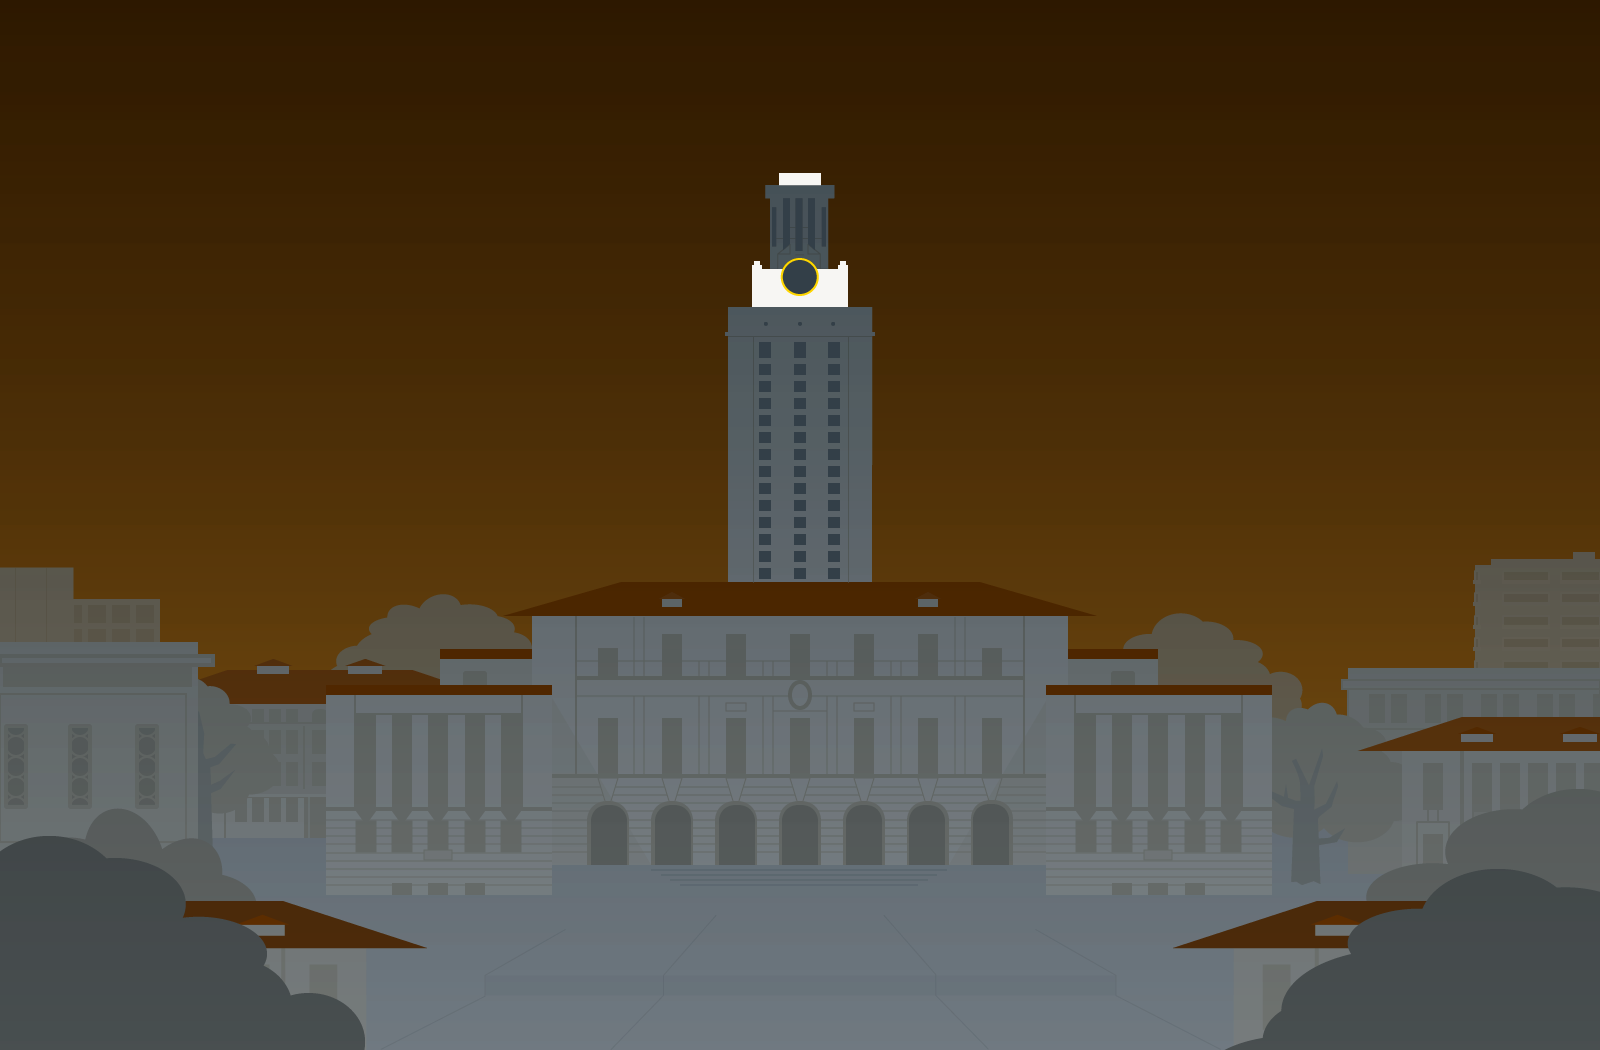 Tower illustration of Darkened lighting configuration